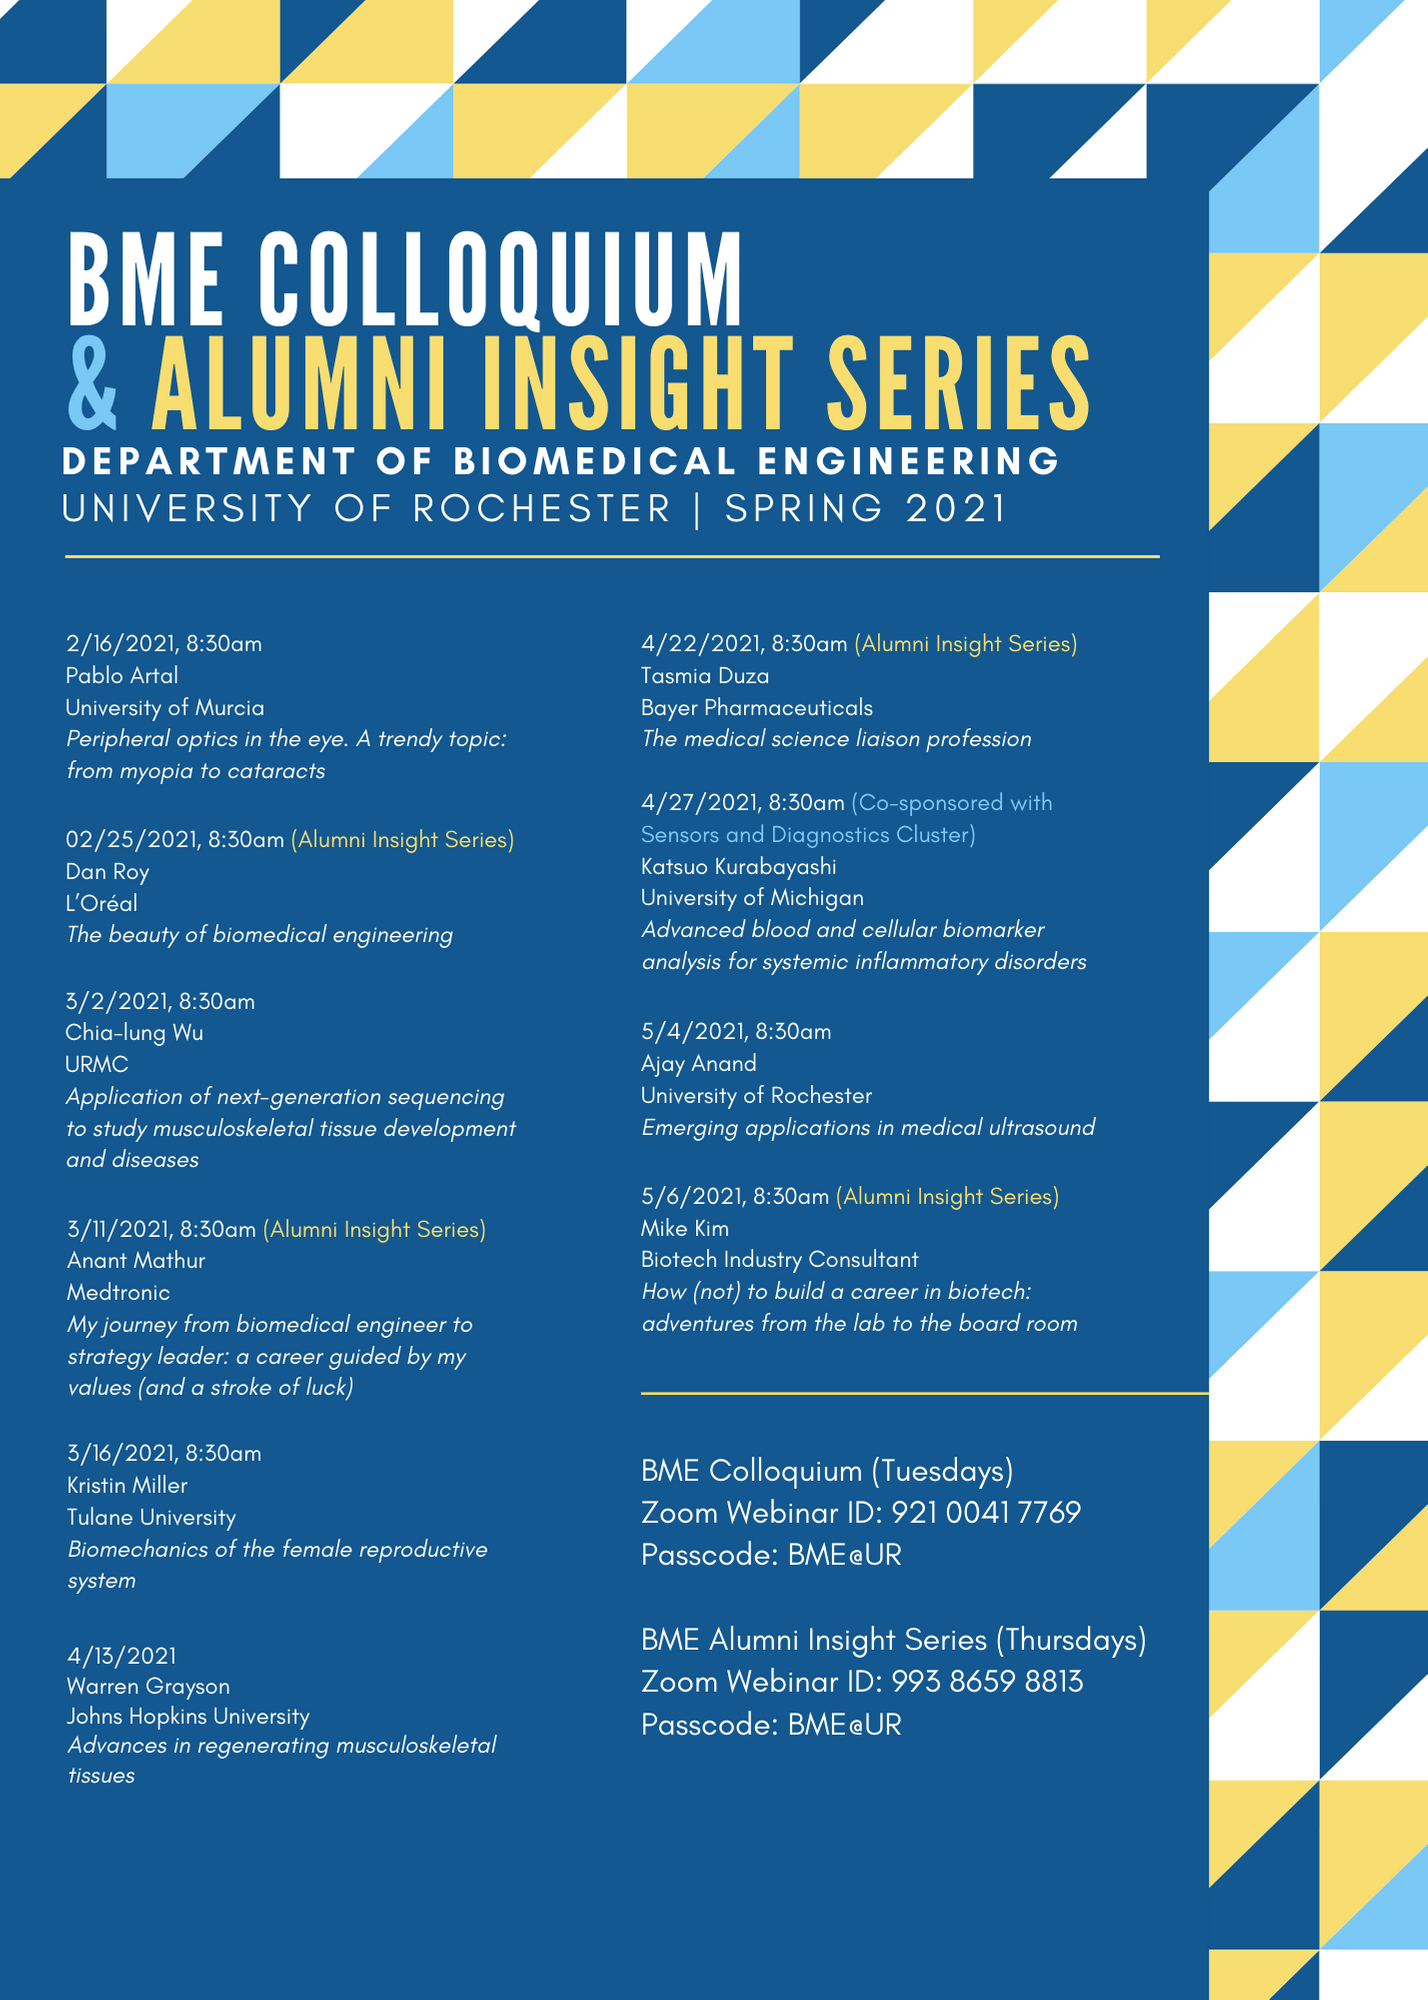 bme-colloquium--alumni-insight-series-flyer-spring-2021.png